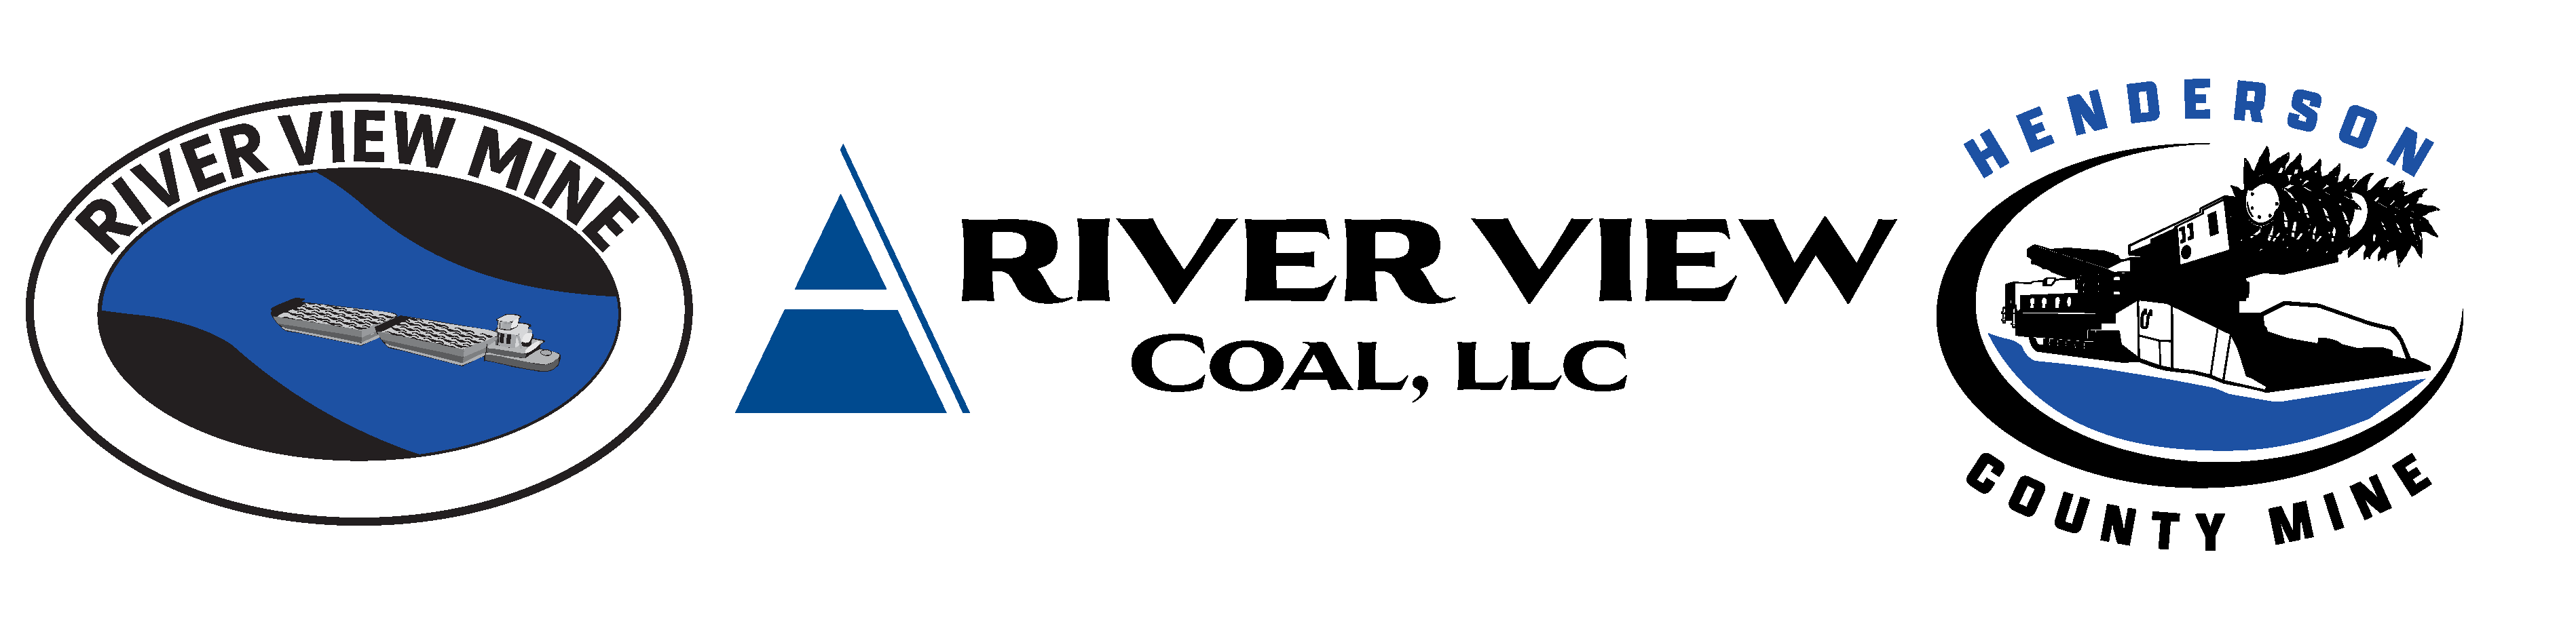 River View Coal, LLC